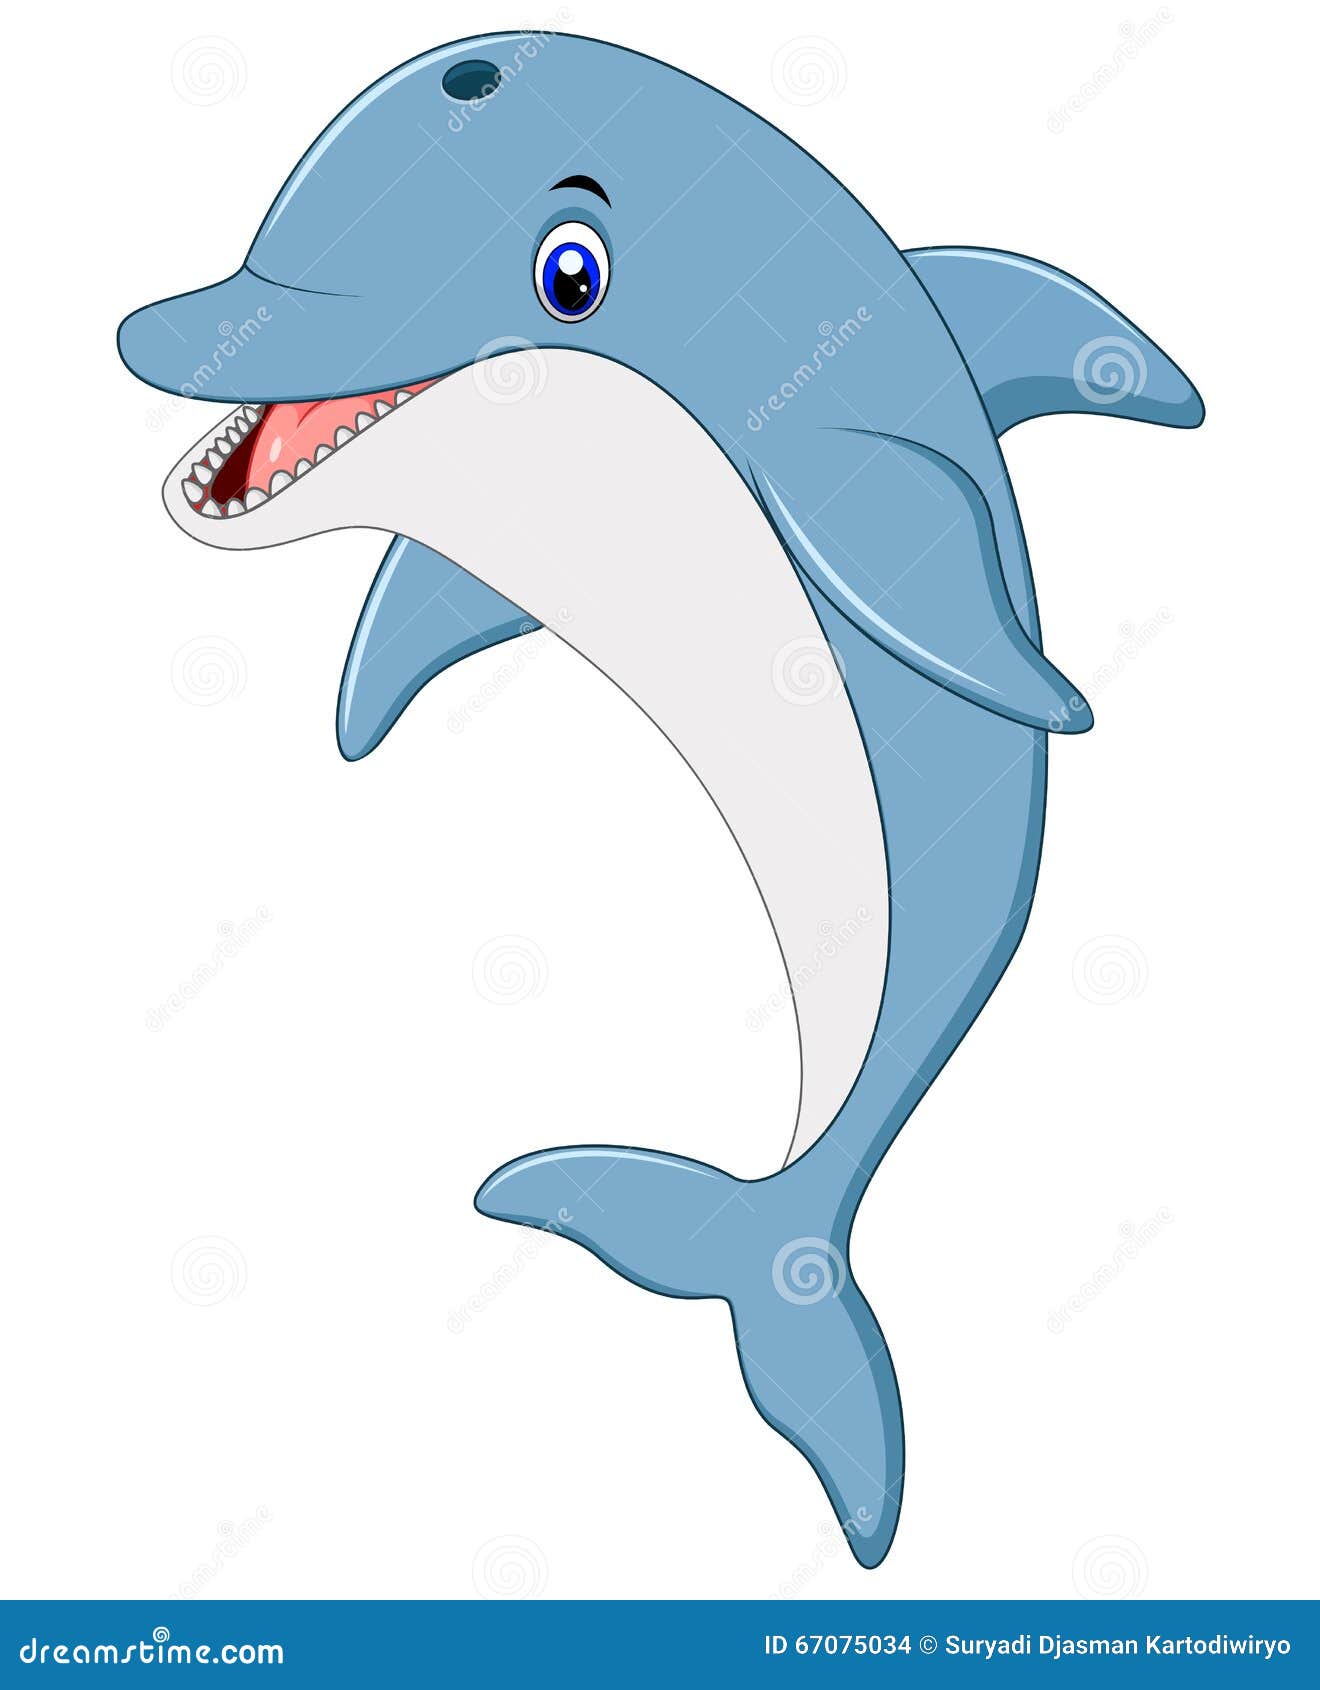 standing dolphin illustration stock vector - illustration